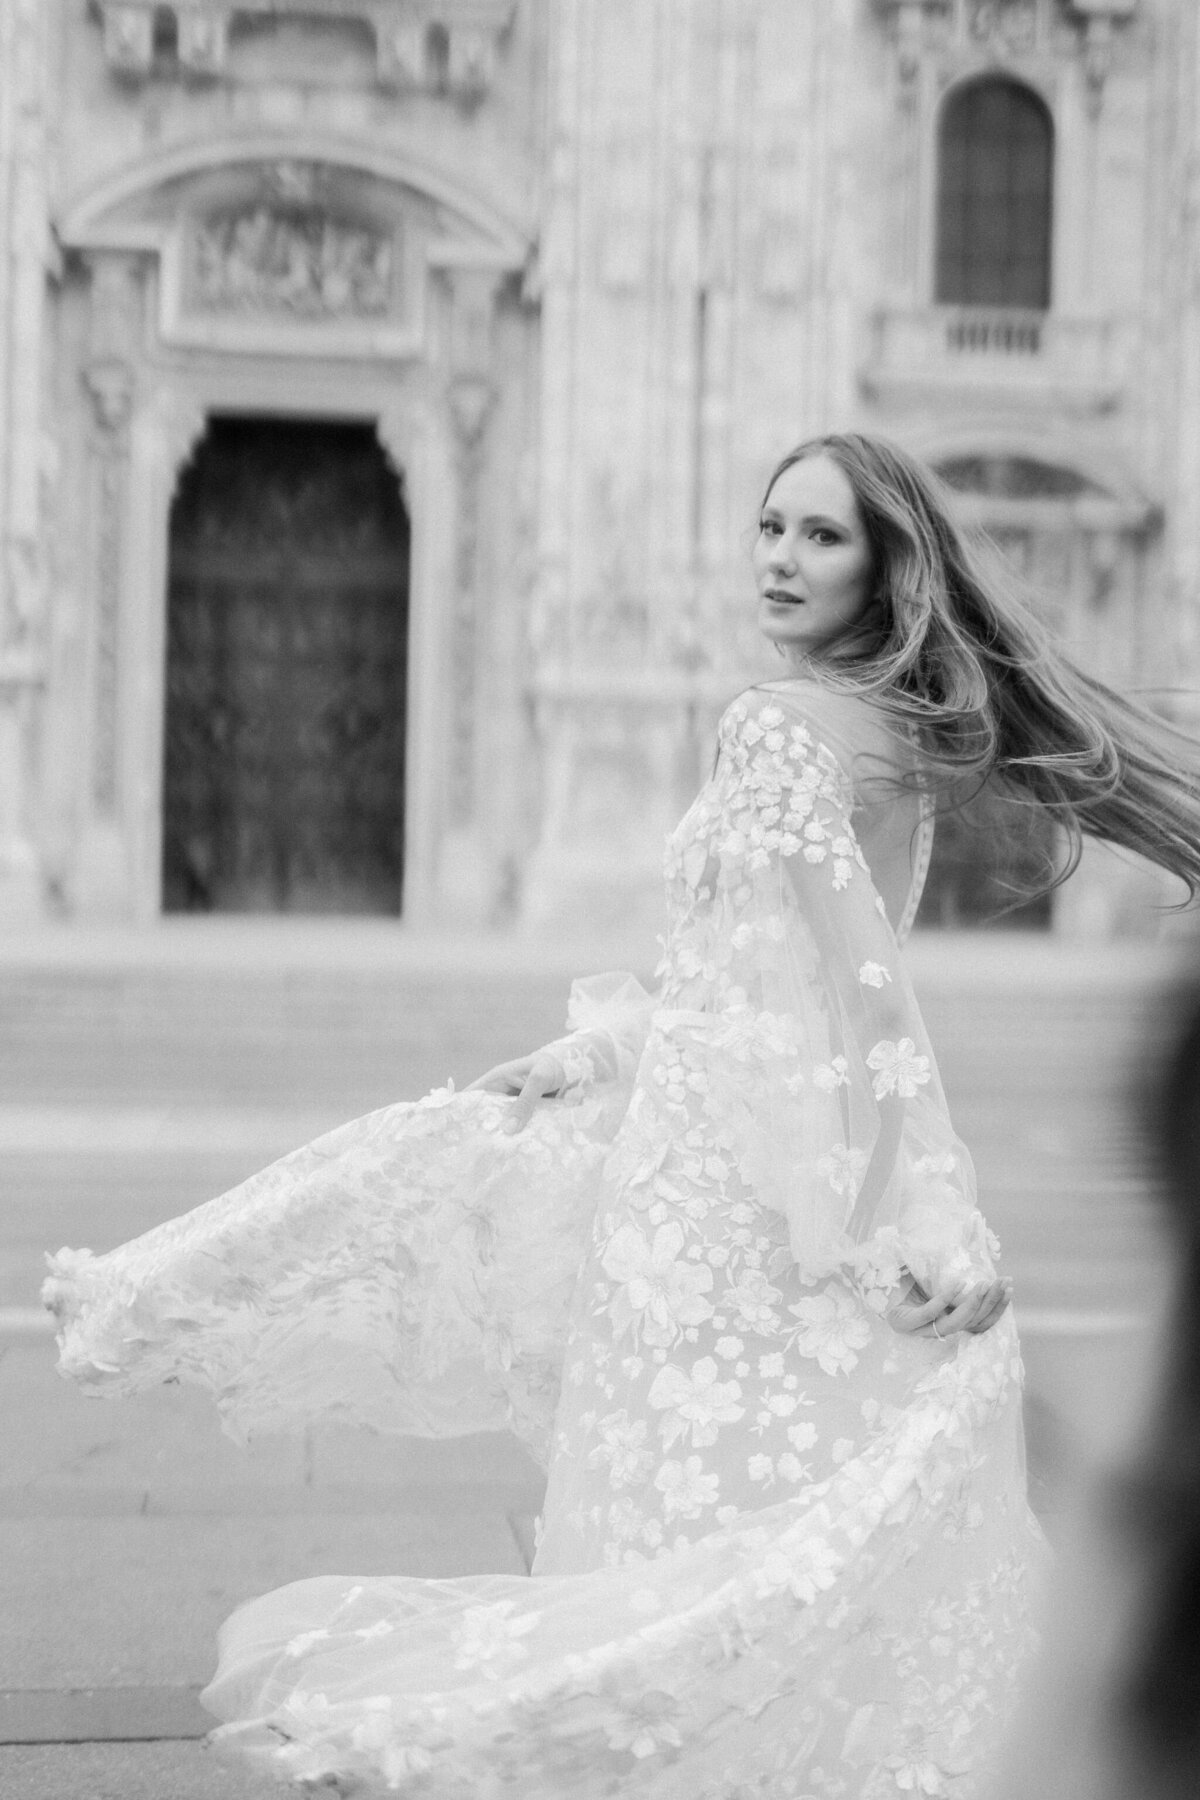 063-Milan-Duomo-Inspiration-Love-Story Elopement-Cinematic-Romance-Destination-Wedding-Editorial-Luxury-Fine-Art-Lisa-Vigliotta-Photography